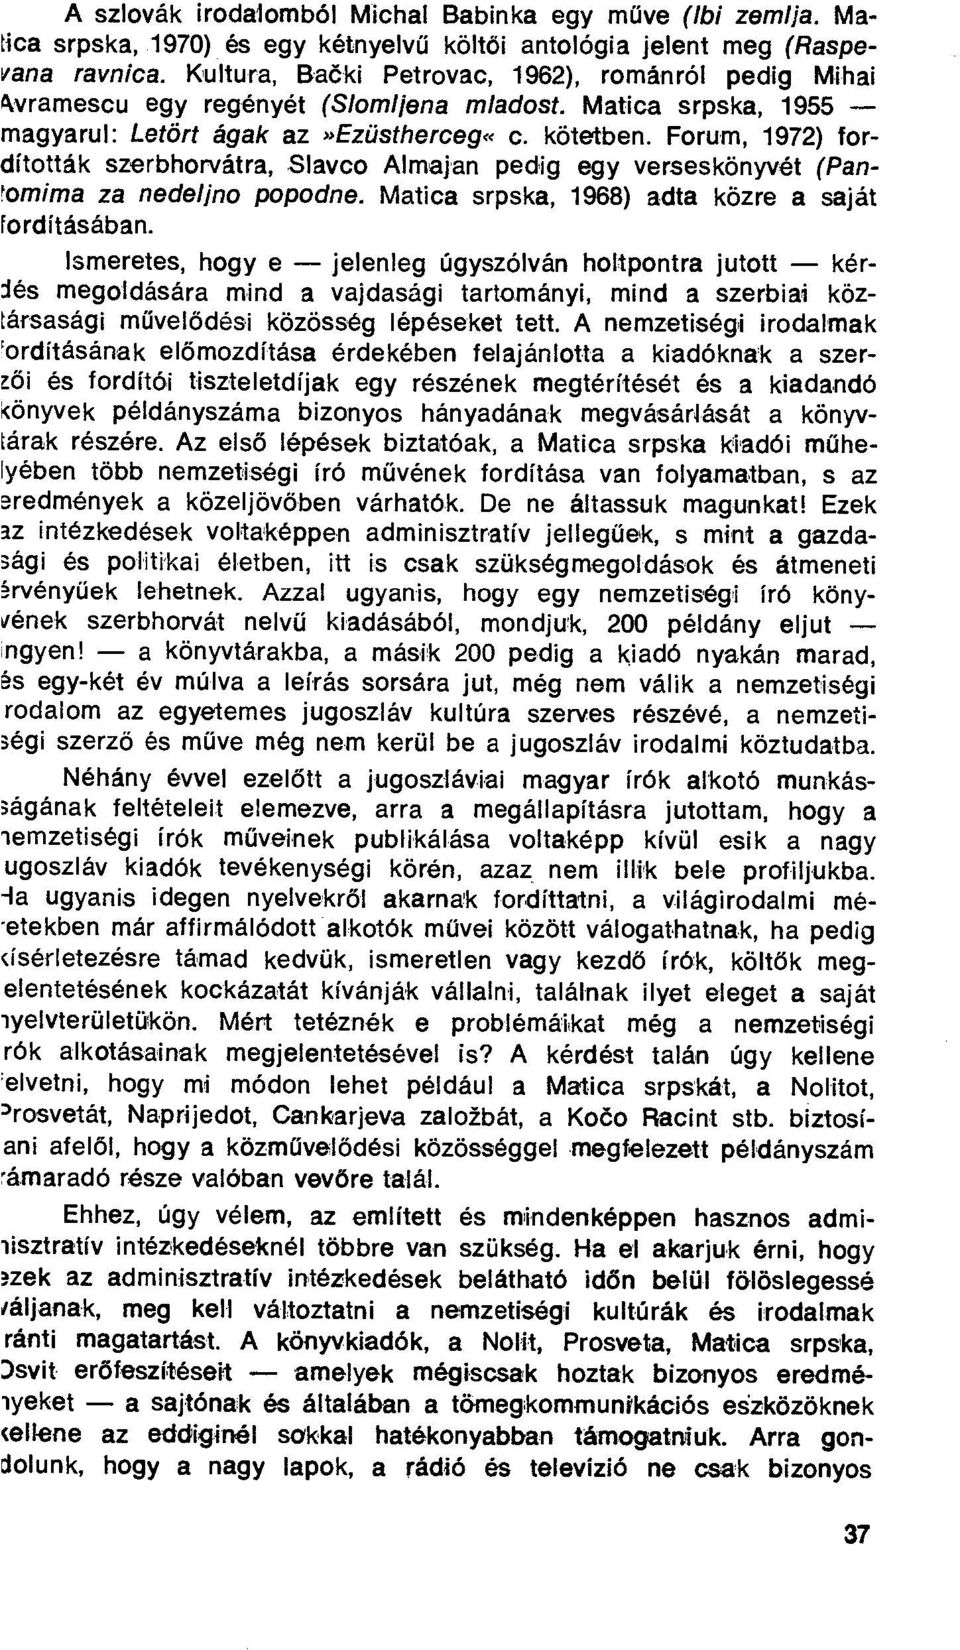 Forum, 1972) fordították szerbhorvátra, Slavco Almajan pedig egy verseskönyvét (Panromima za nedeljno popodne. Matica srpska, 1968) adta közre a saját íordításában.